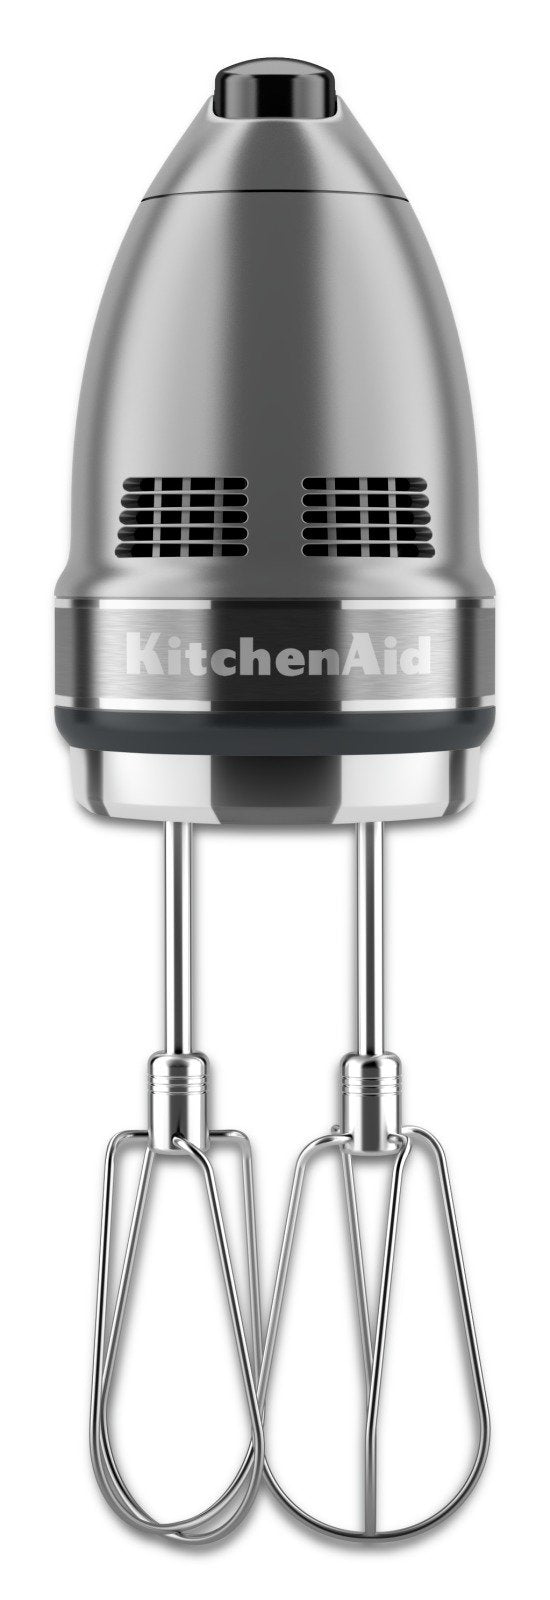 KitchenAid 7-Speed Hand Mixer - KHM7210CU